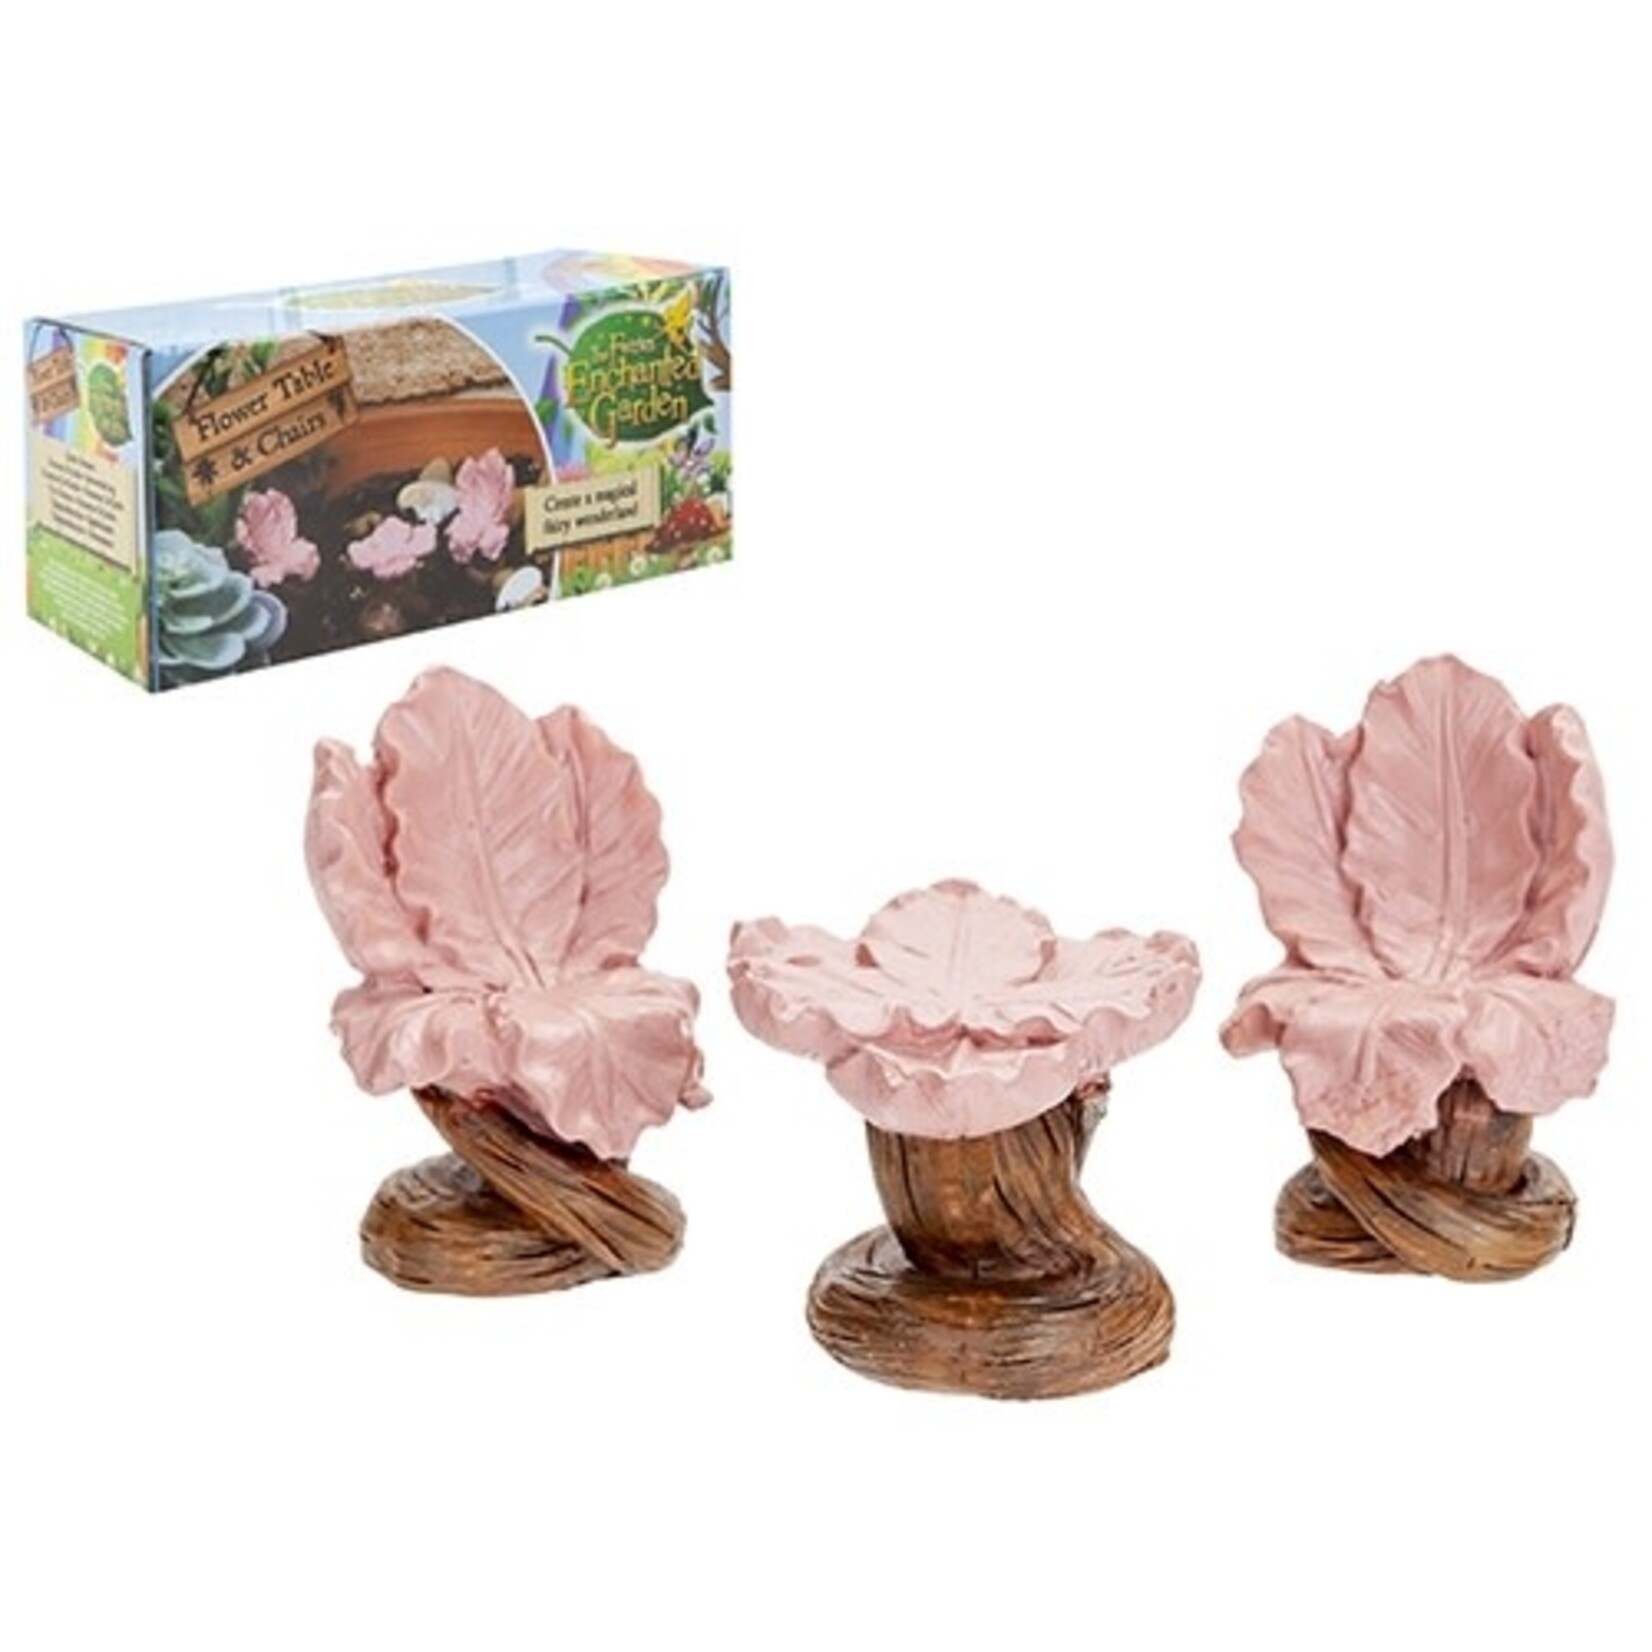 The Fairies Enchanted Garden Secret Fairy Garden Flower Table & Chairs